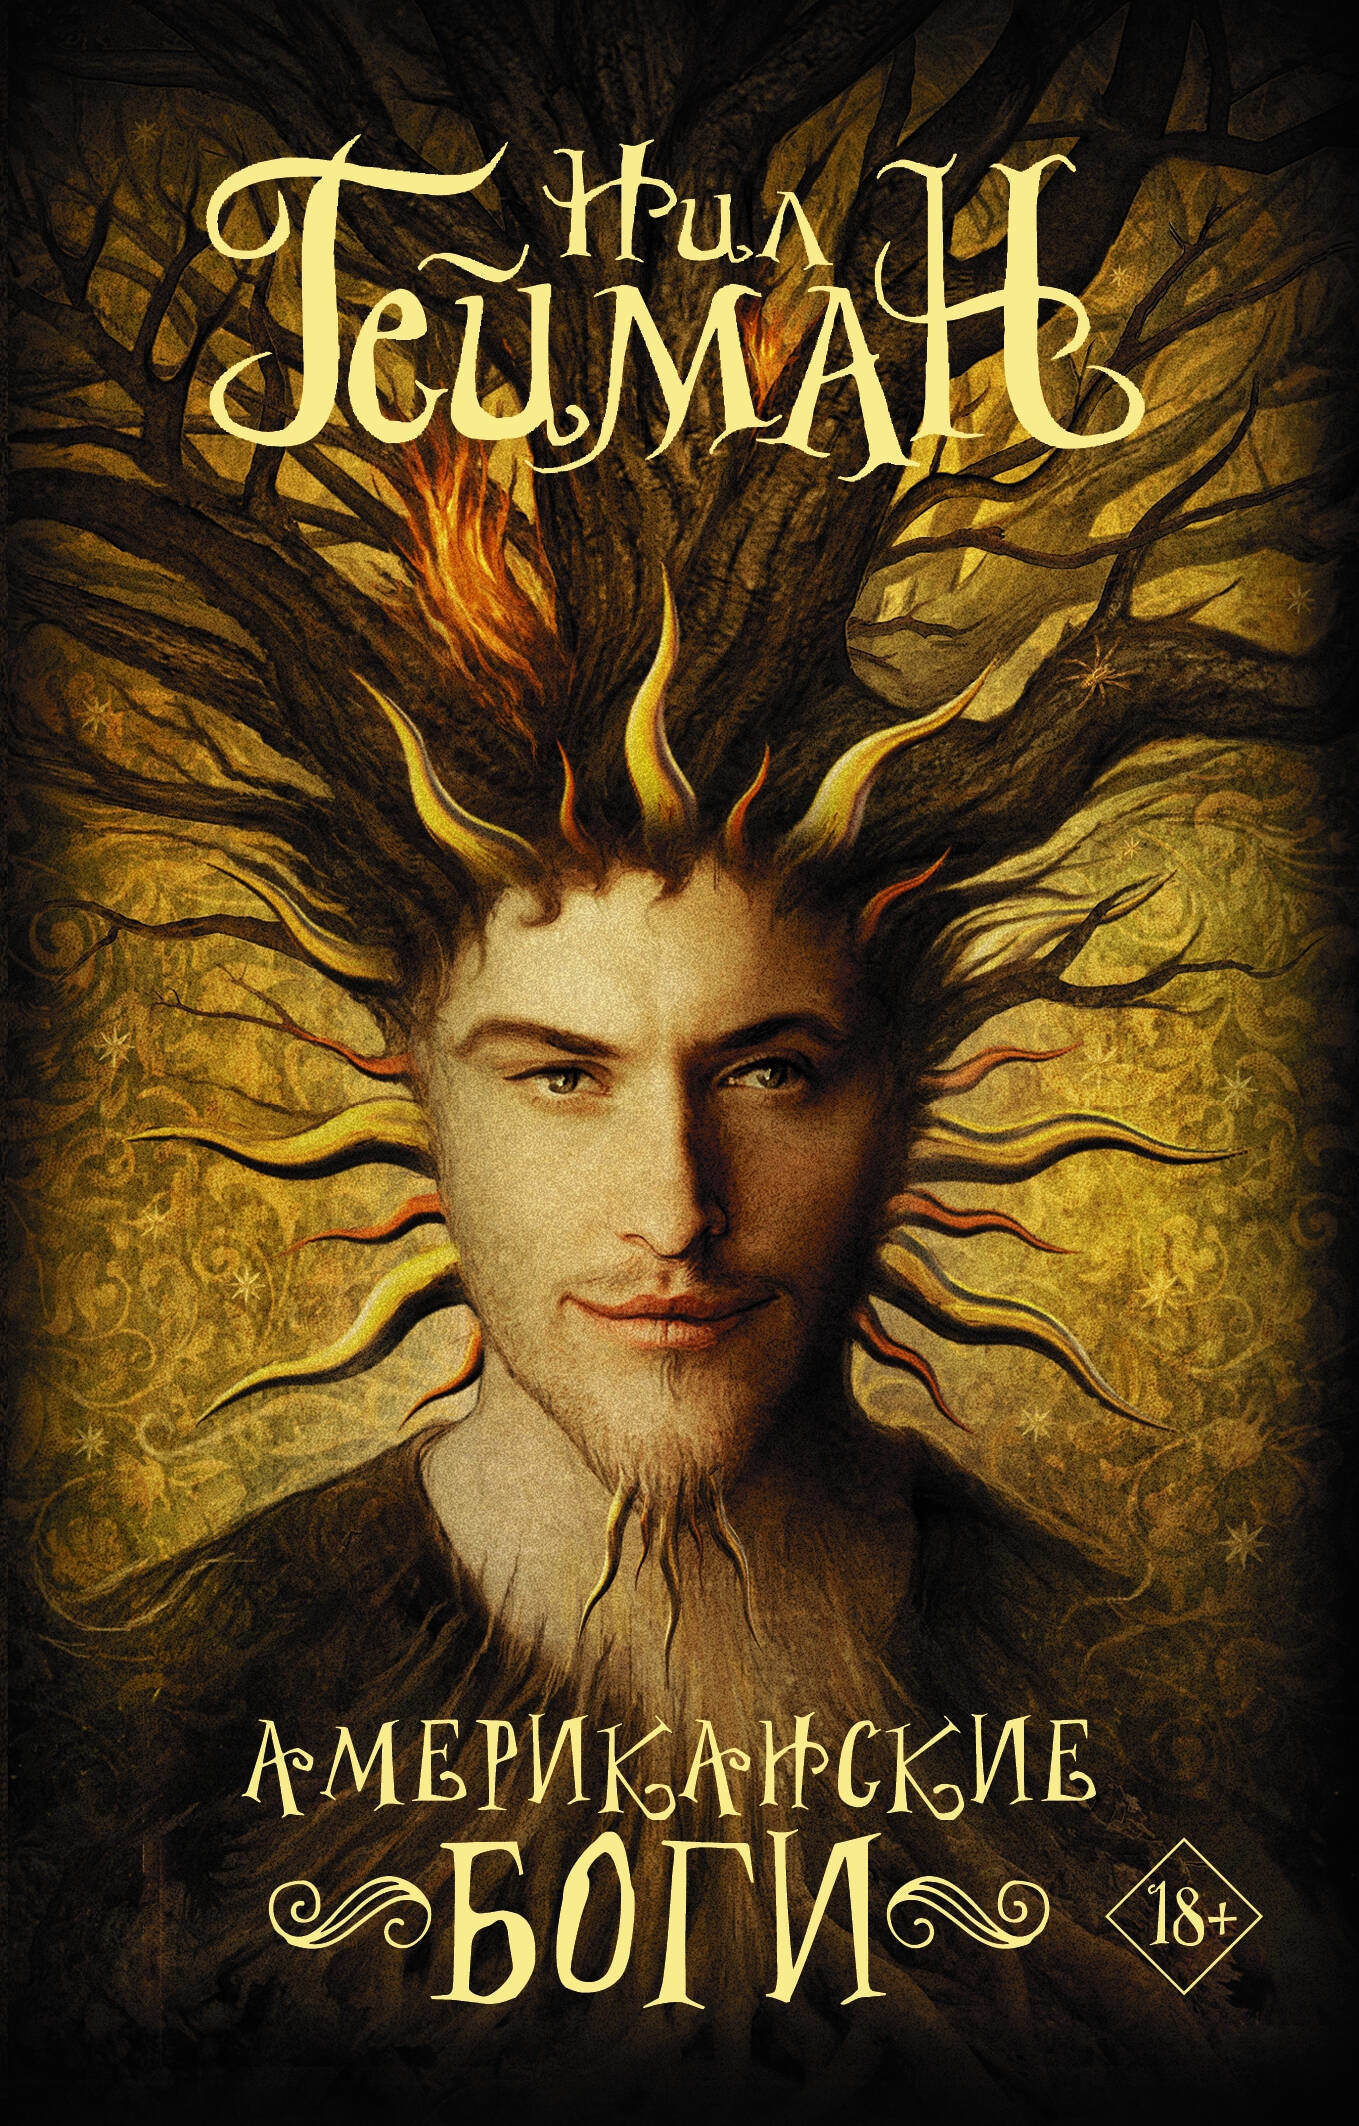 Book “Американские боги” by Нил Гейман — 2023